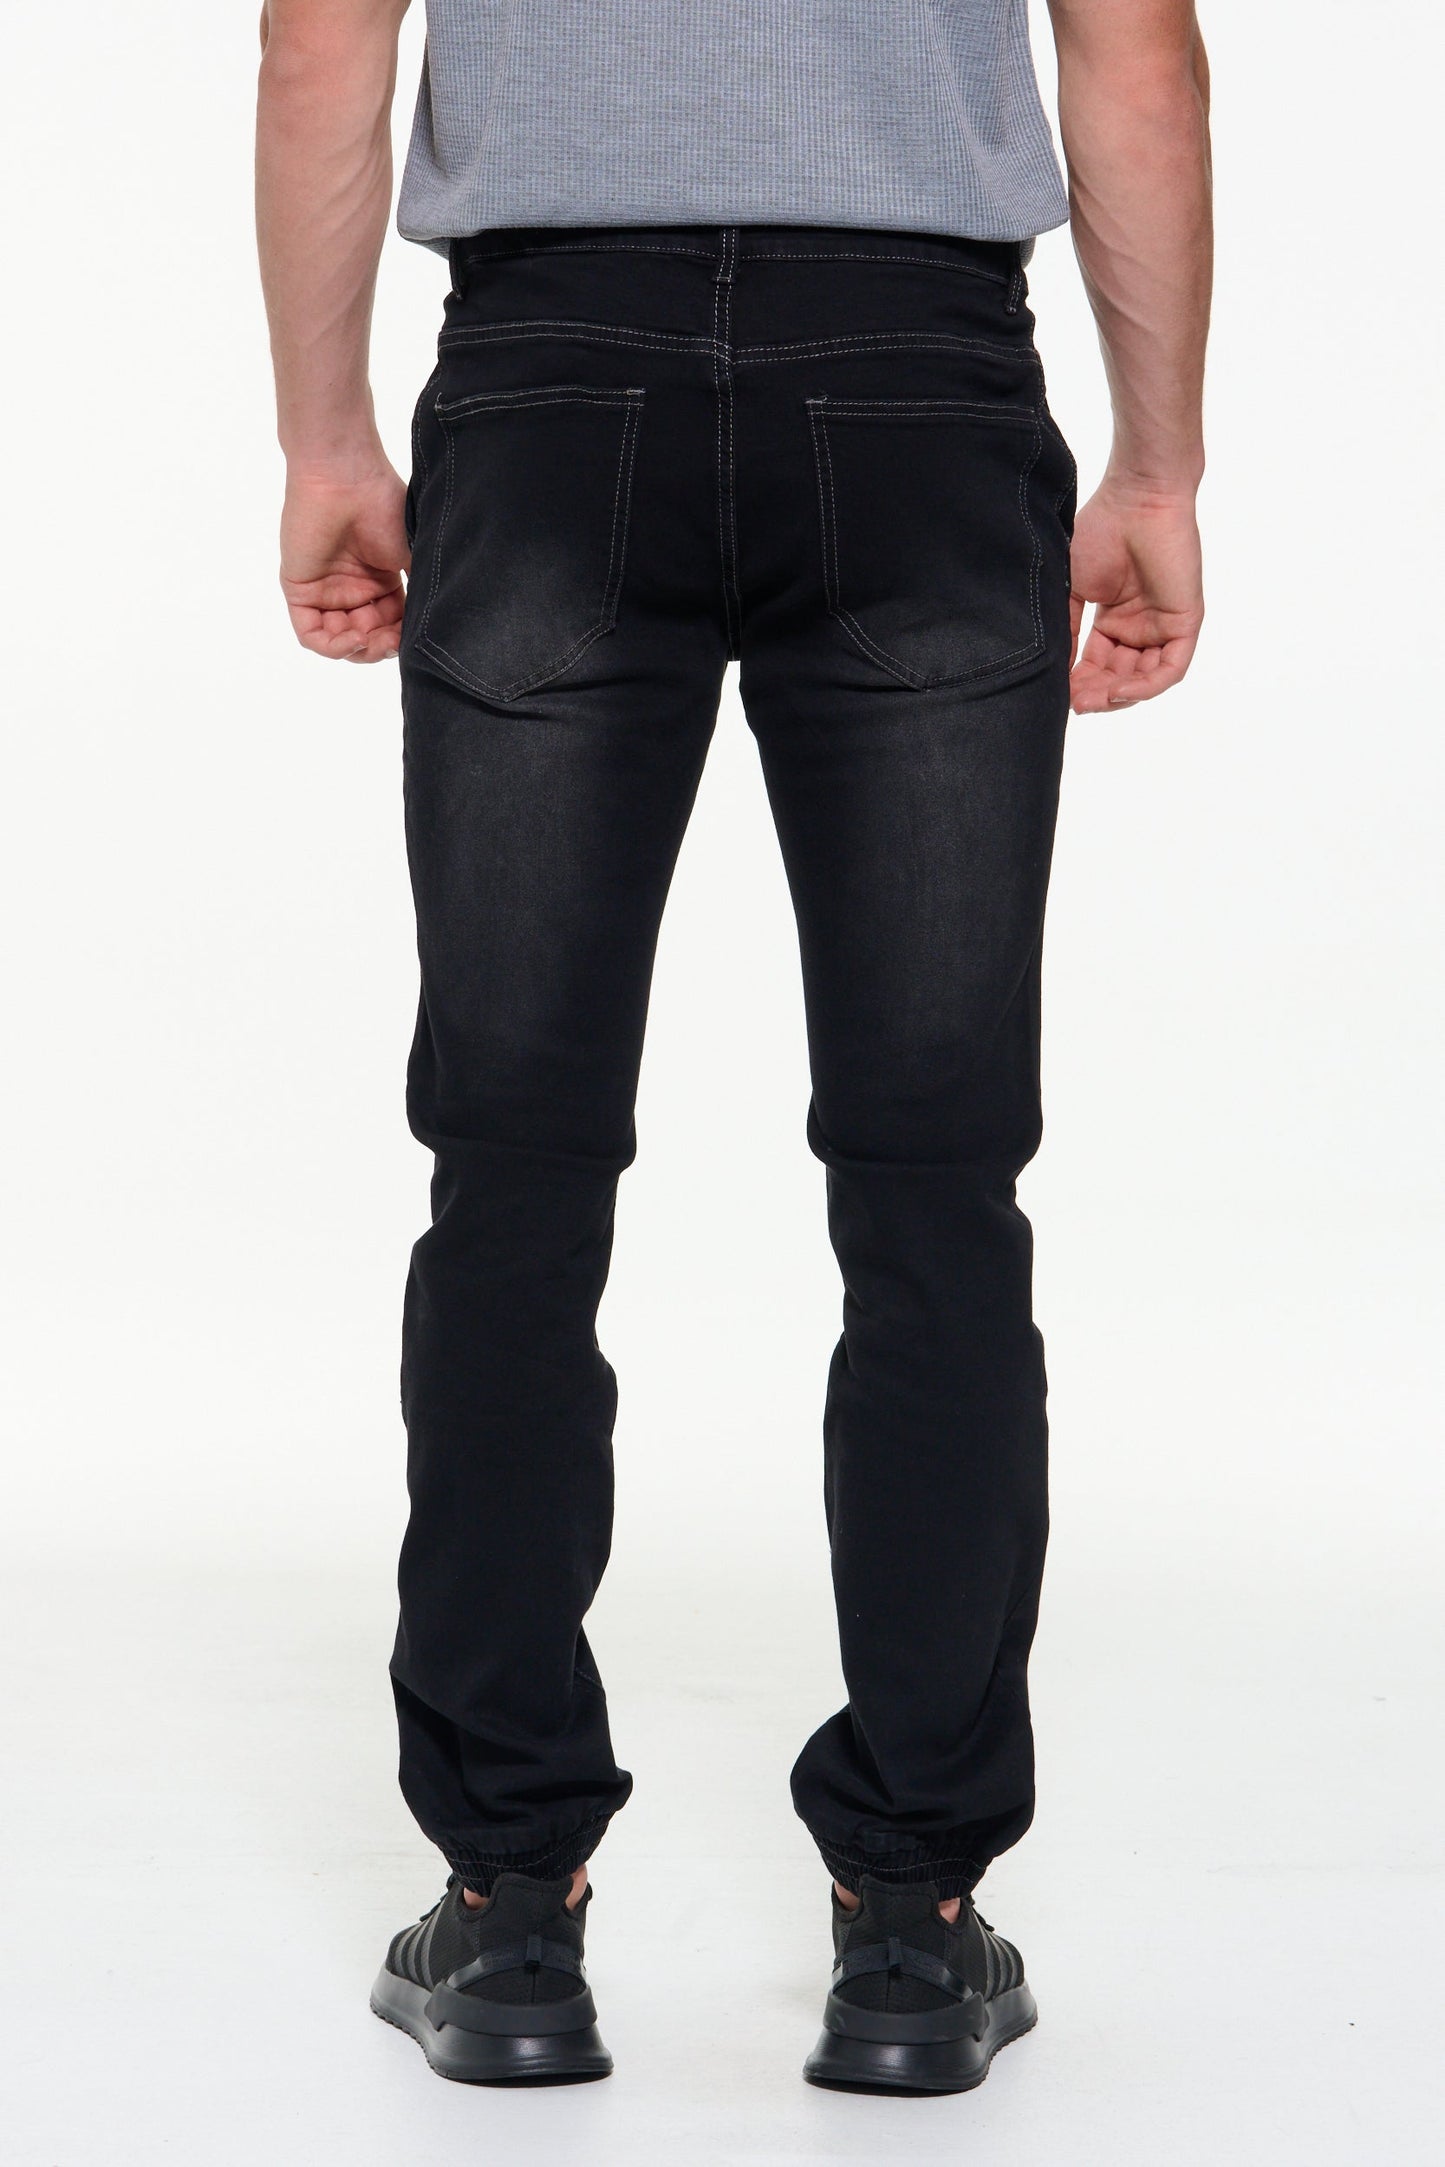 Northcoast black denim pants for men